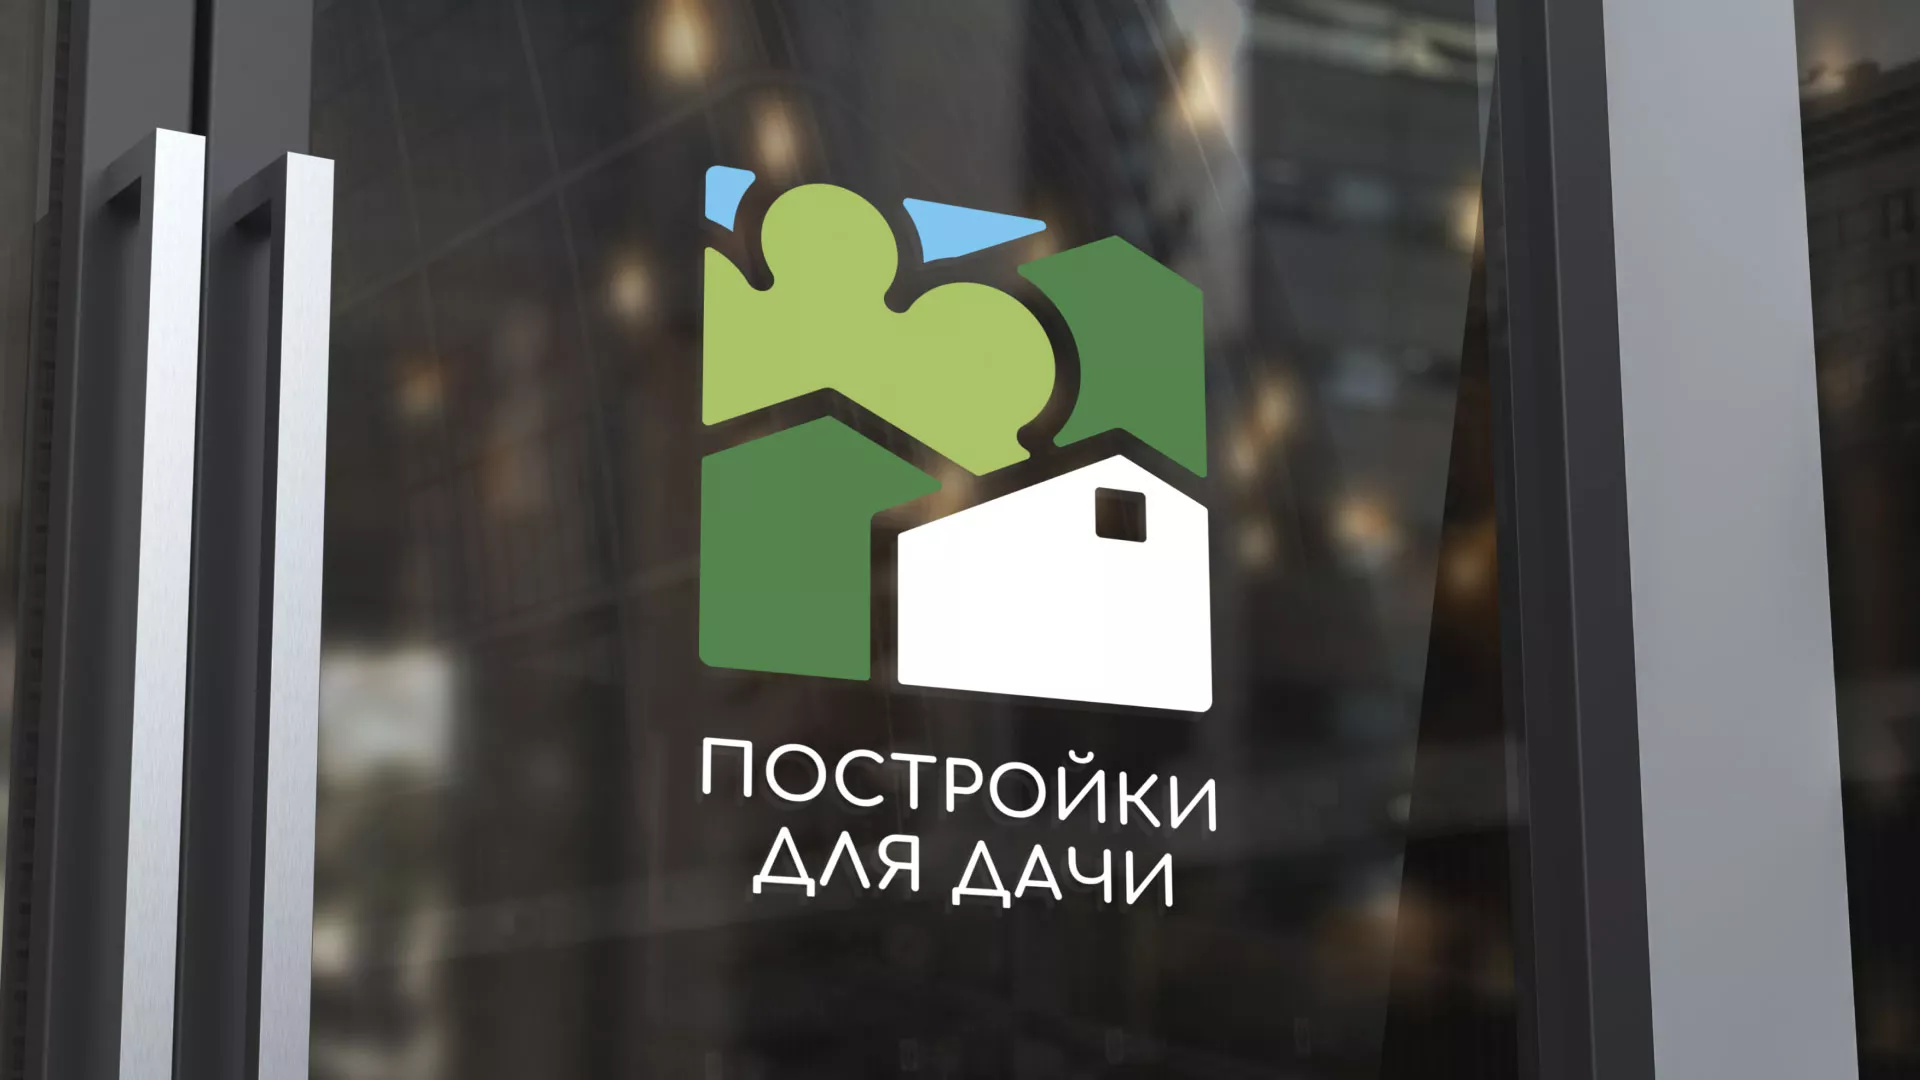 Разработка логотипа в Чадане для компании «Постройки для дачи»